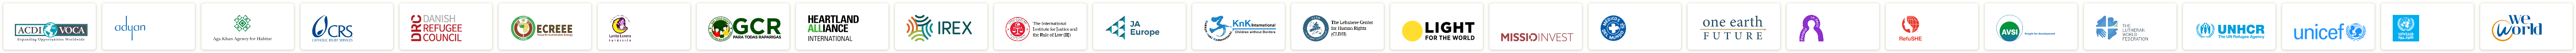 Customer logos of ACDI/VOCA, Adyan Foundation, Aga Khan Agency for Habitat, Catholic Relief Services, DRC, ...